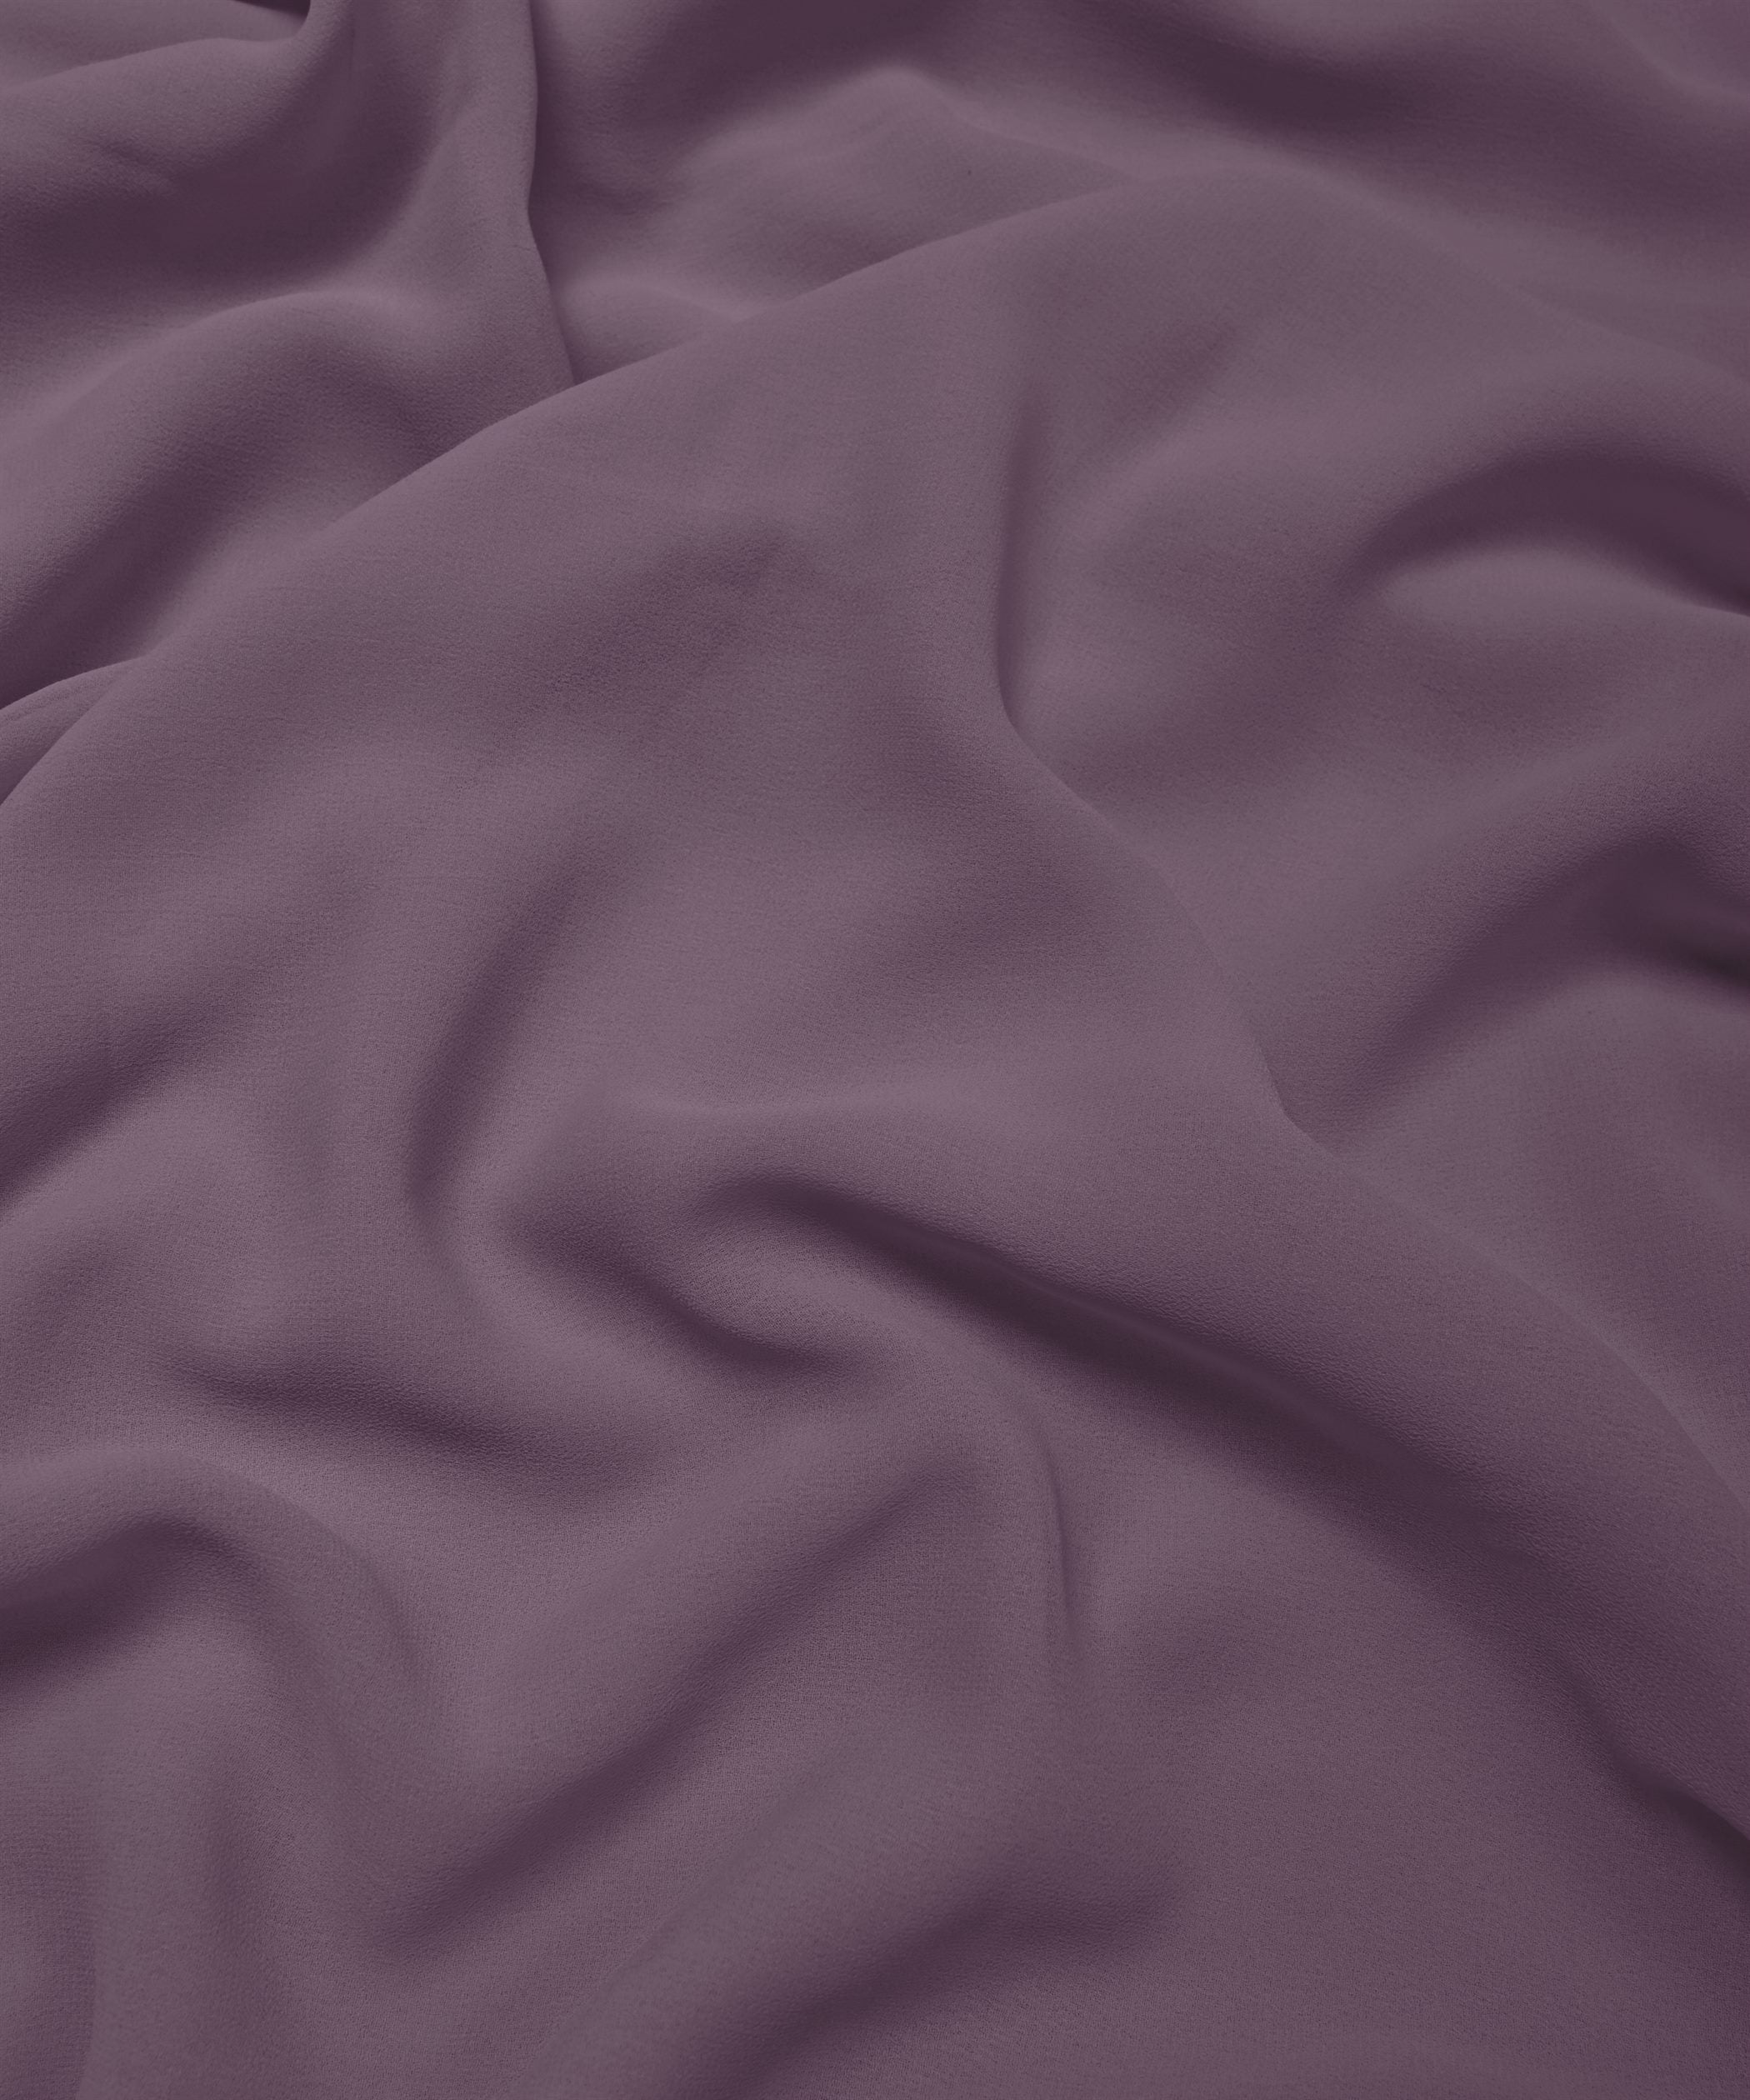 Dim Grey Plain Dyed Georgette (60 Grams) Fabric